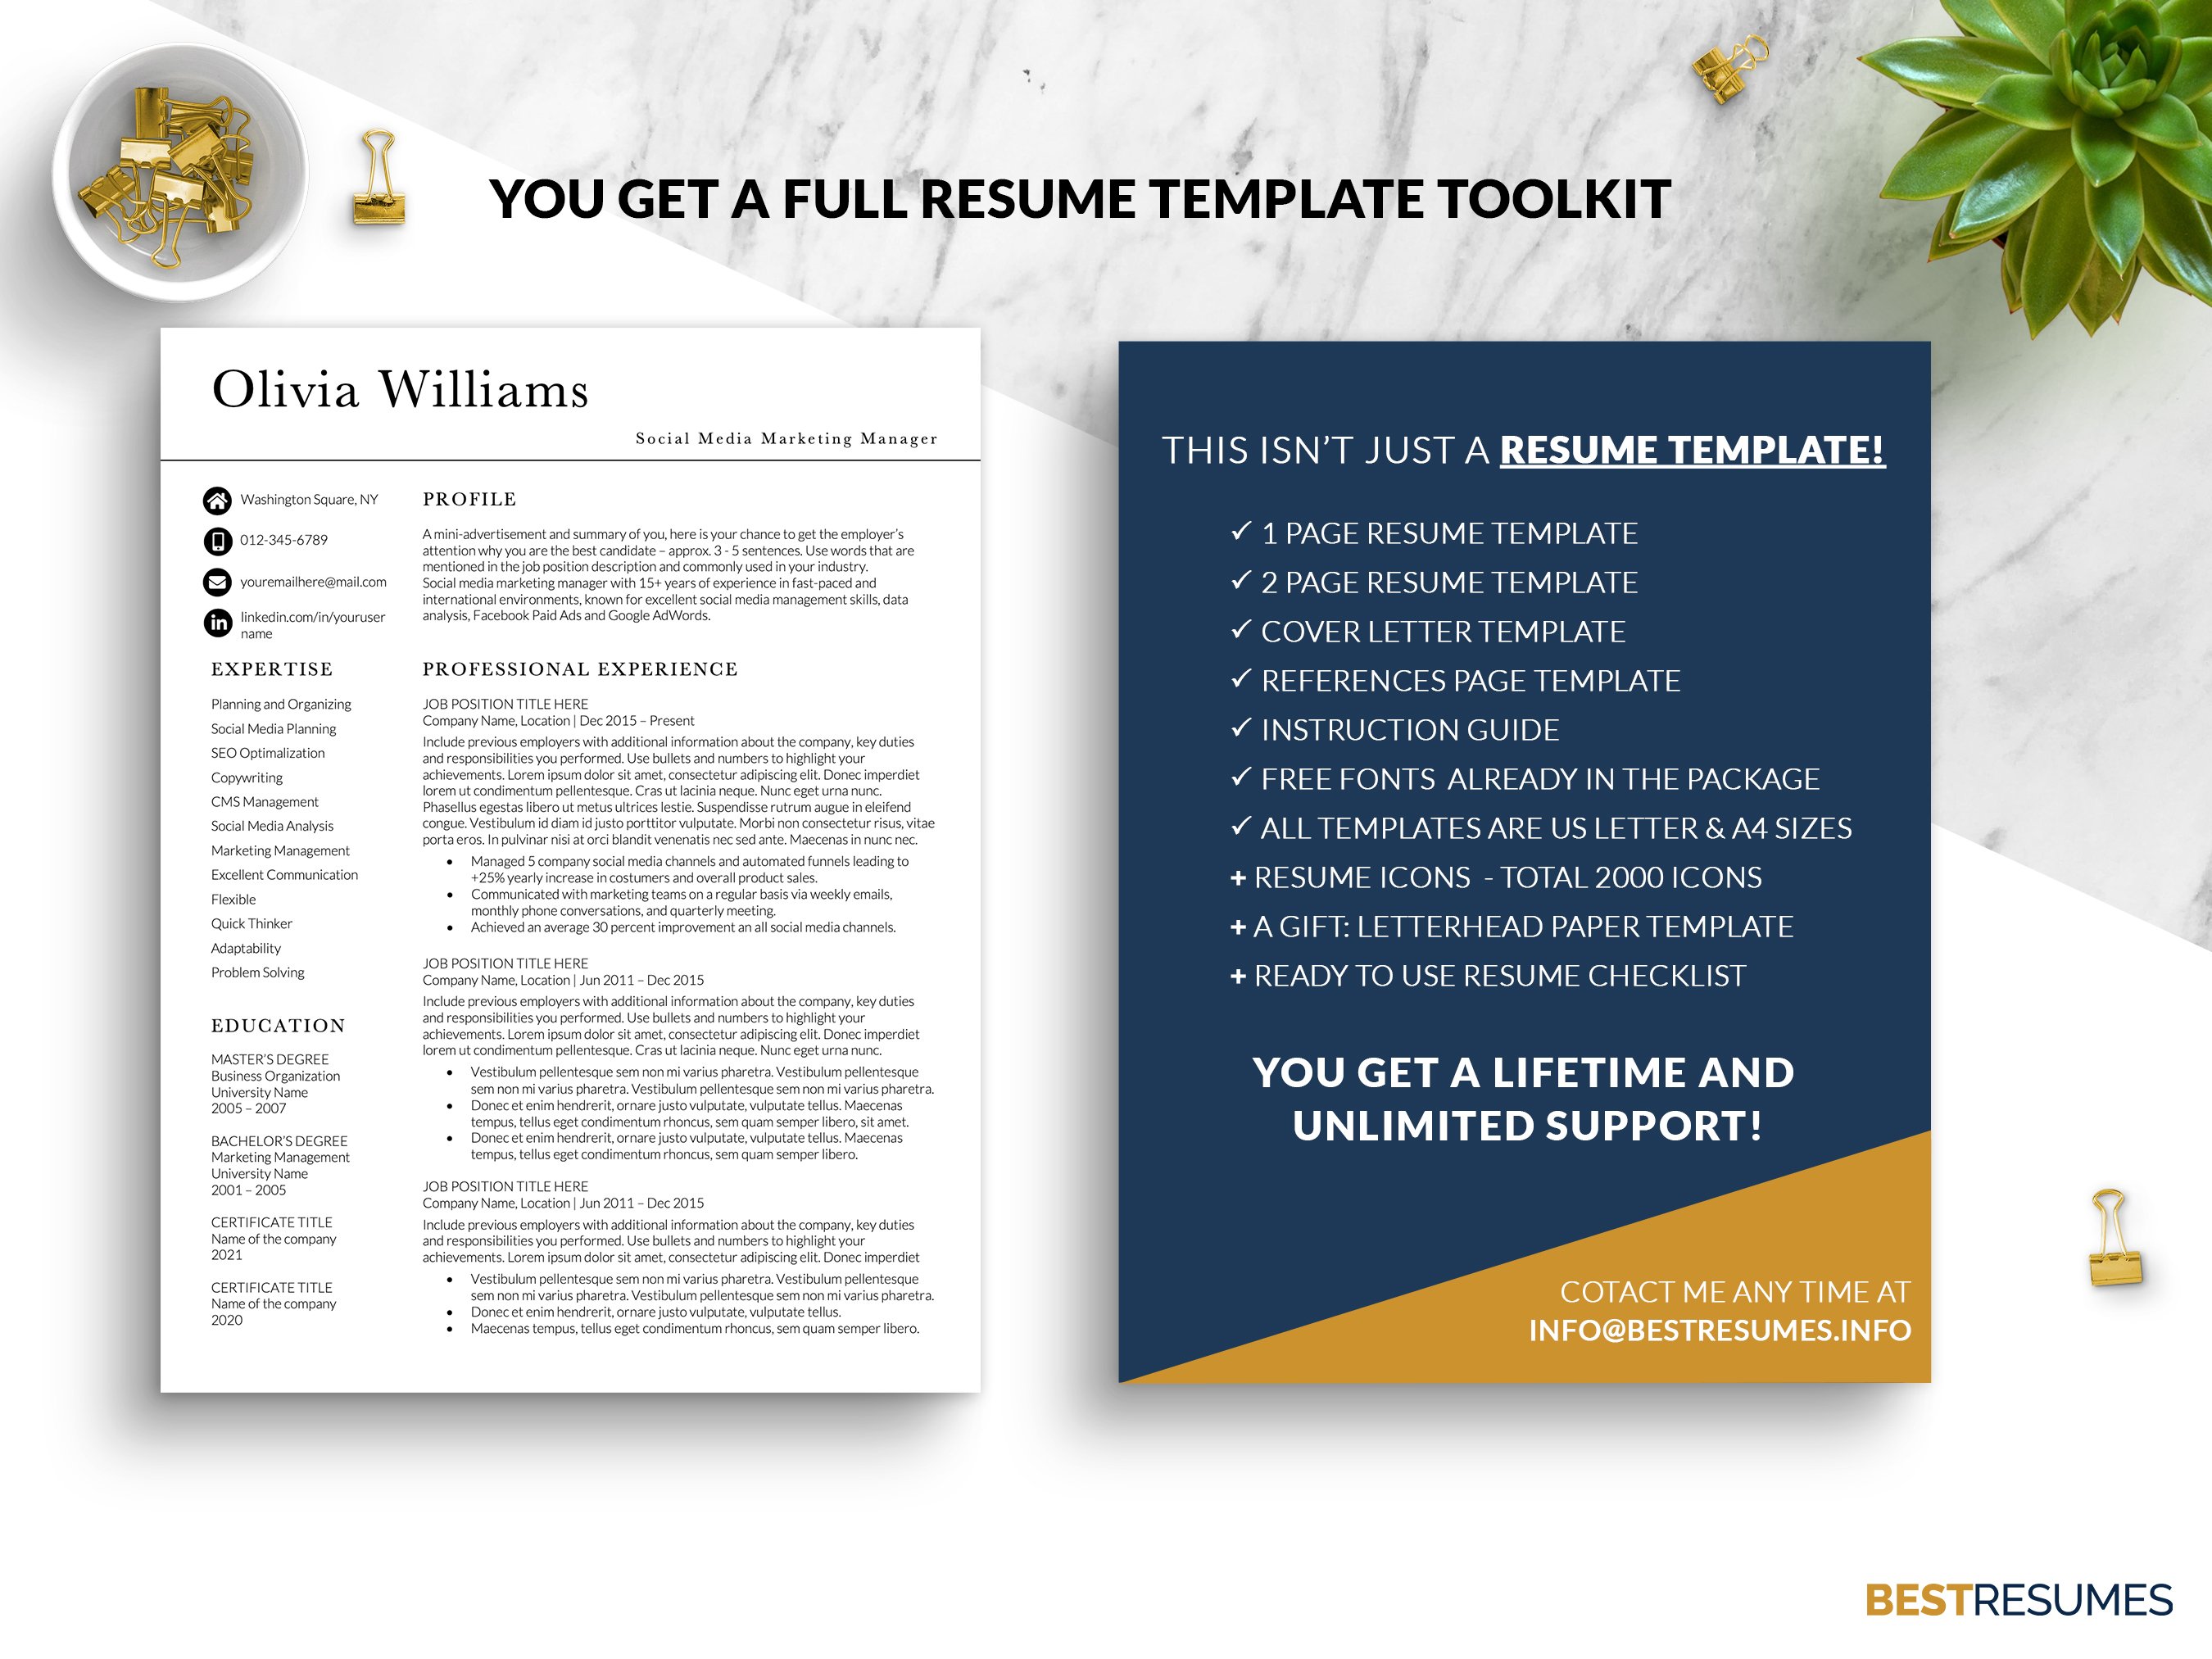 business resume template resume help olivia williams 357